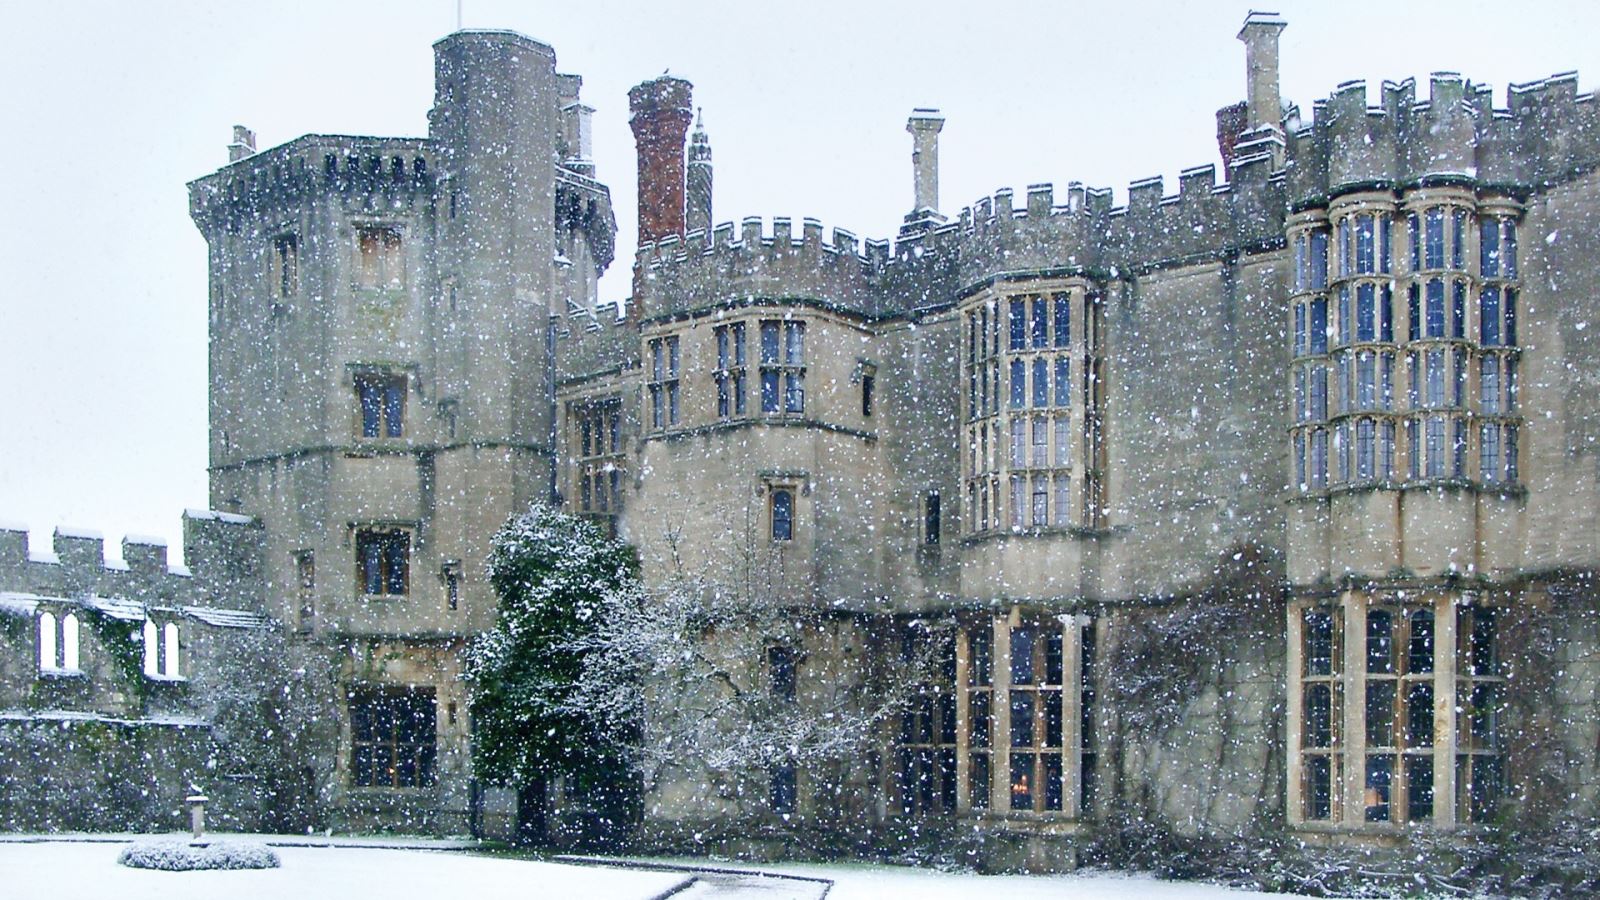 Snow falls over Thornbury Castle